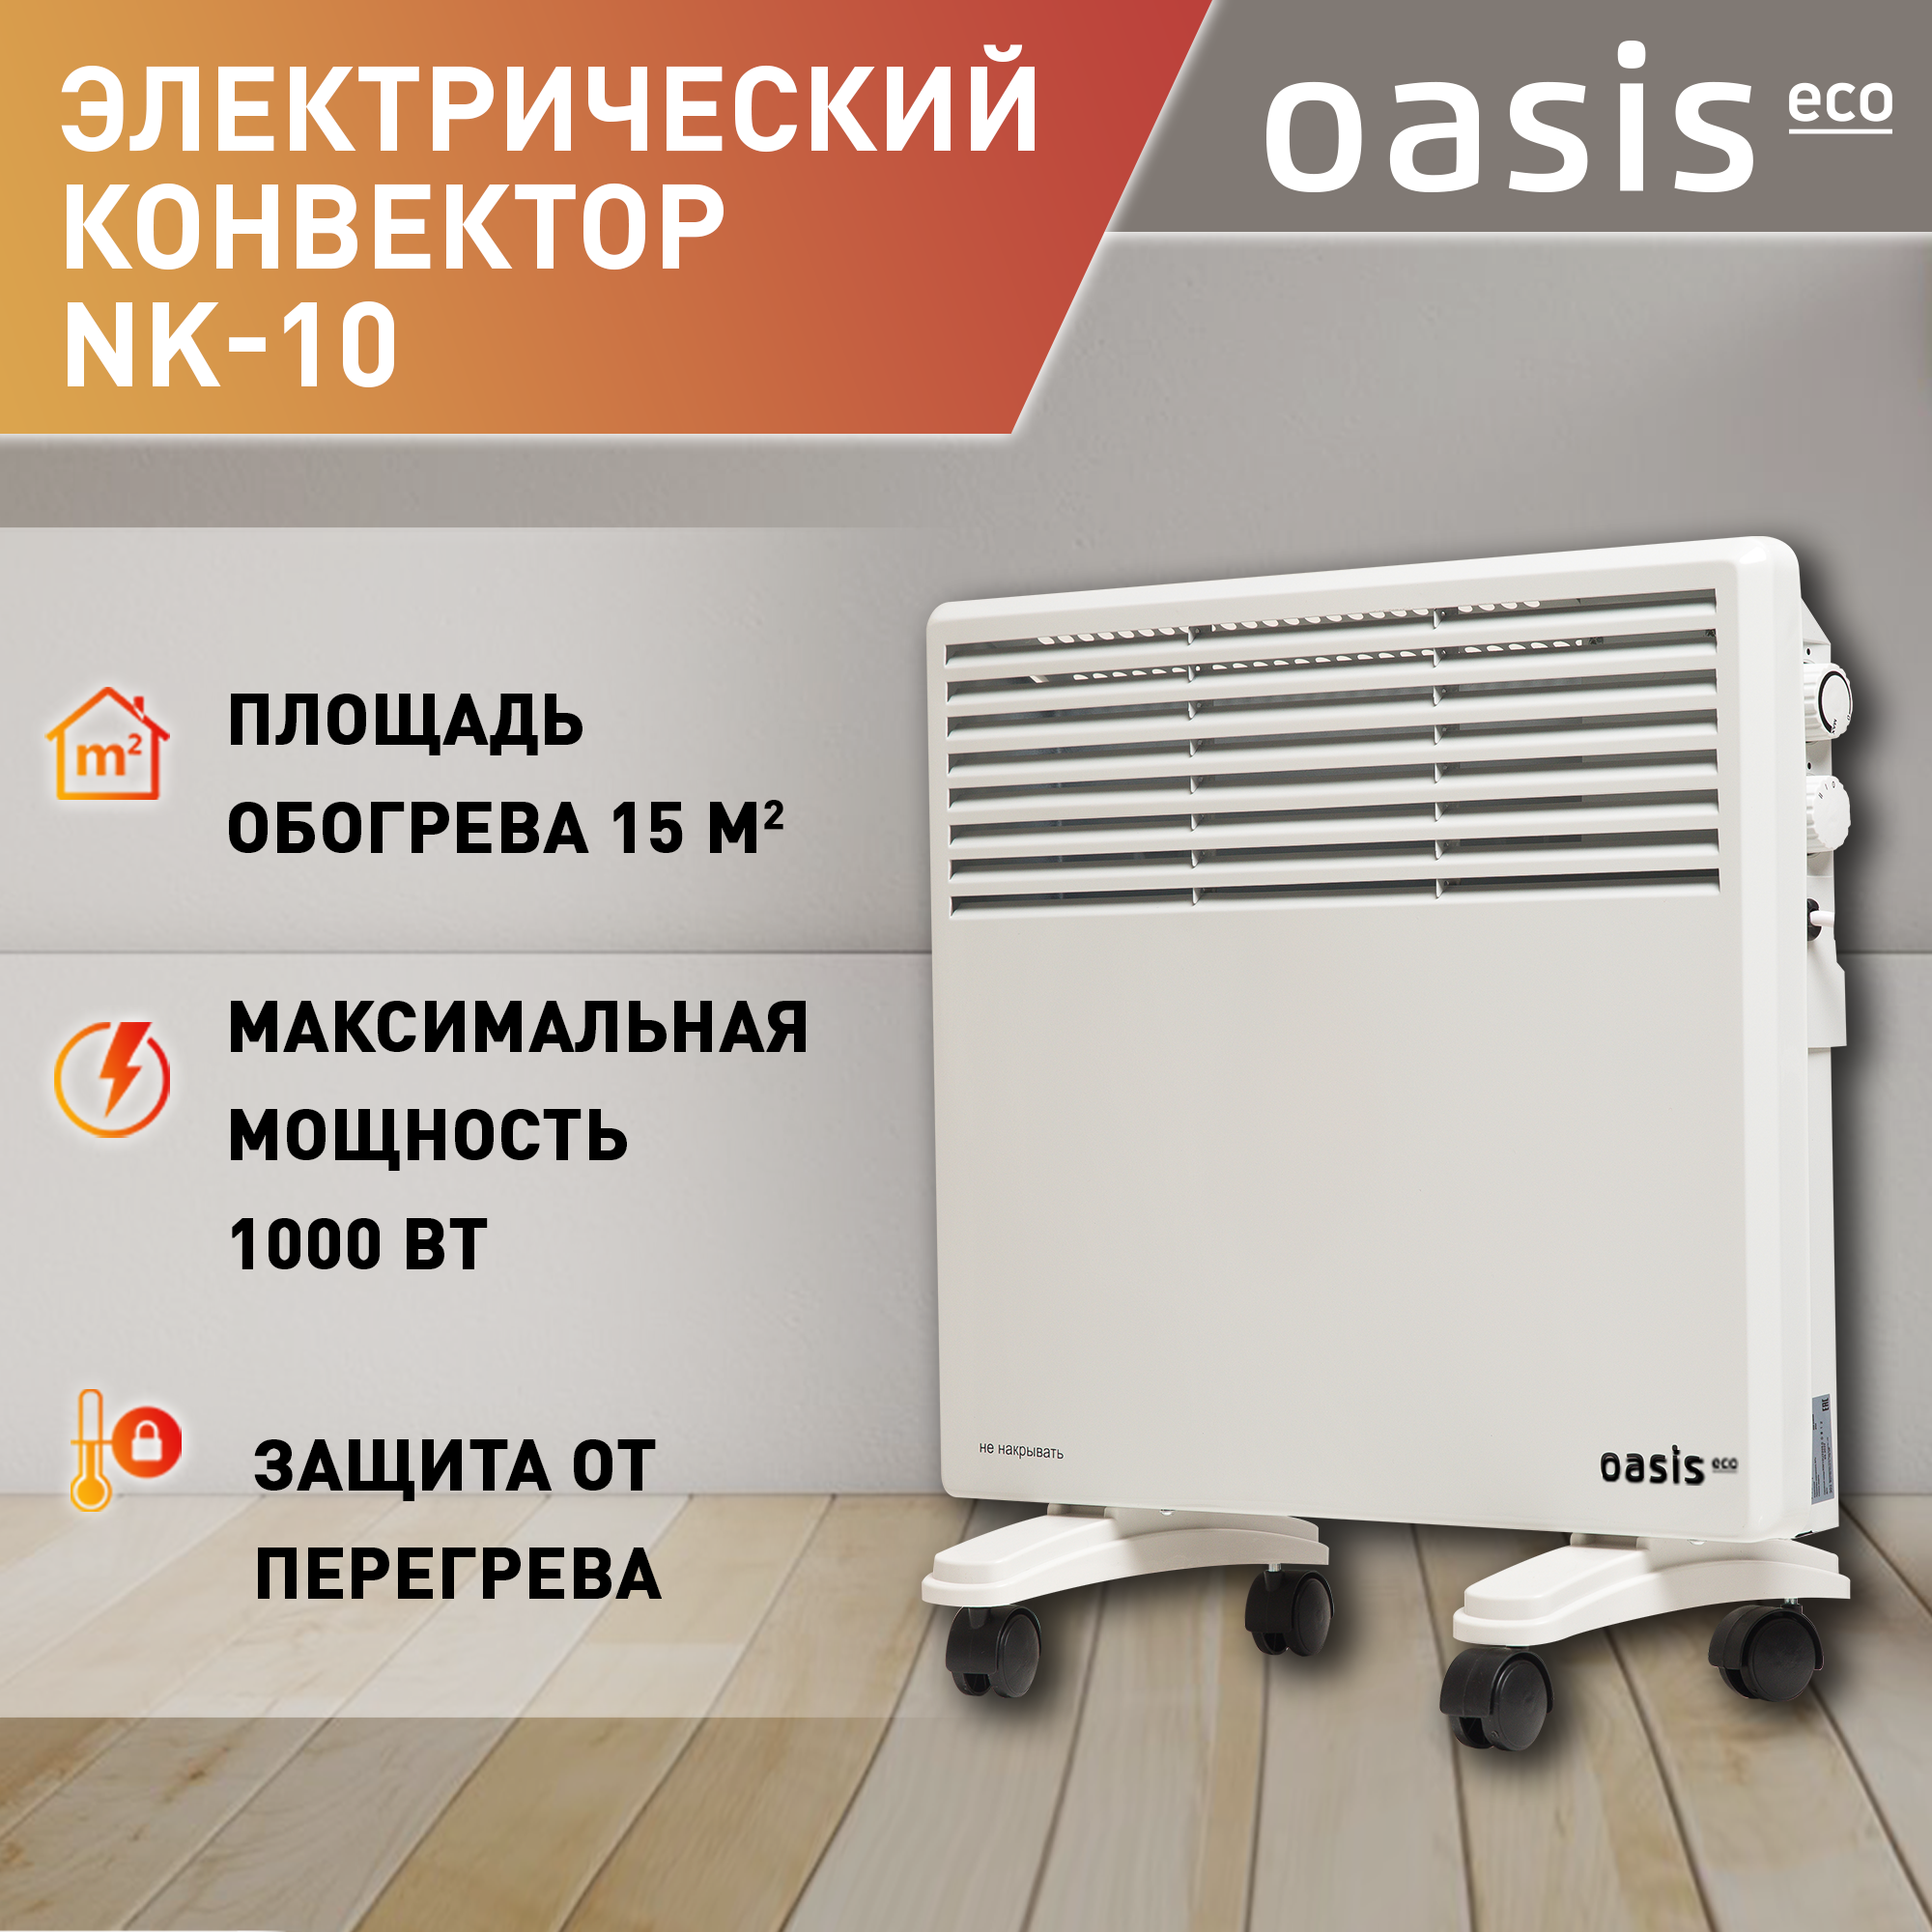 Конвектор Oasis Eco NK-10 белый конвектор oasis eco nk 10 белый